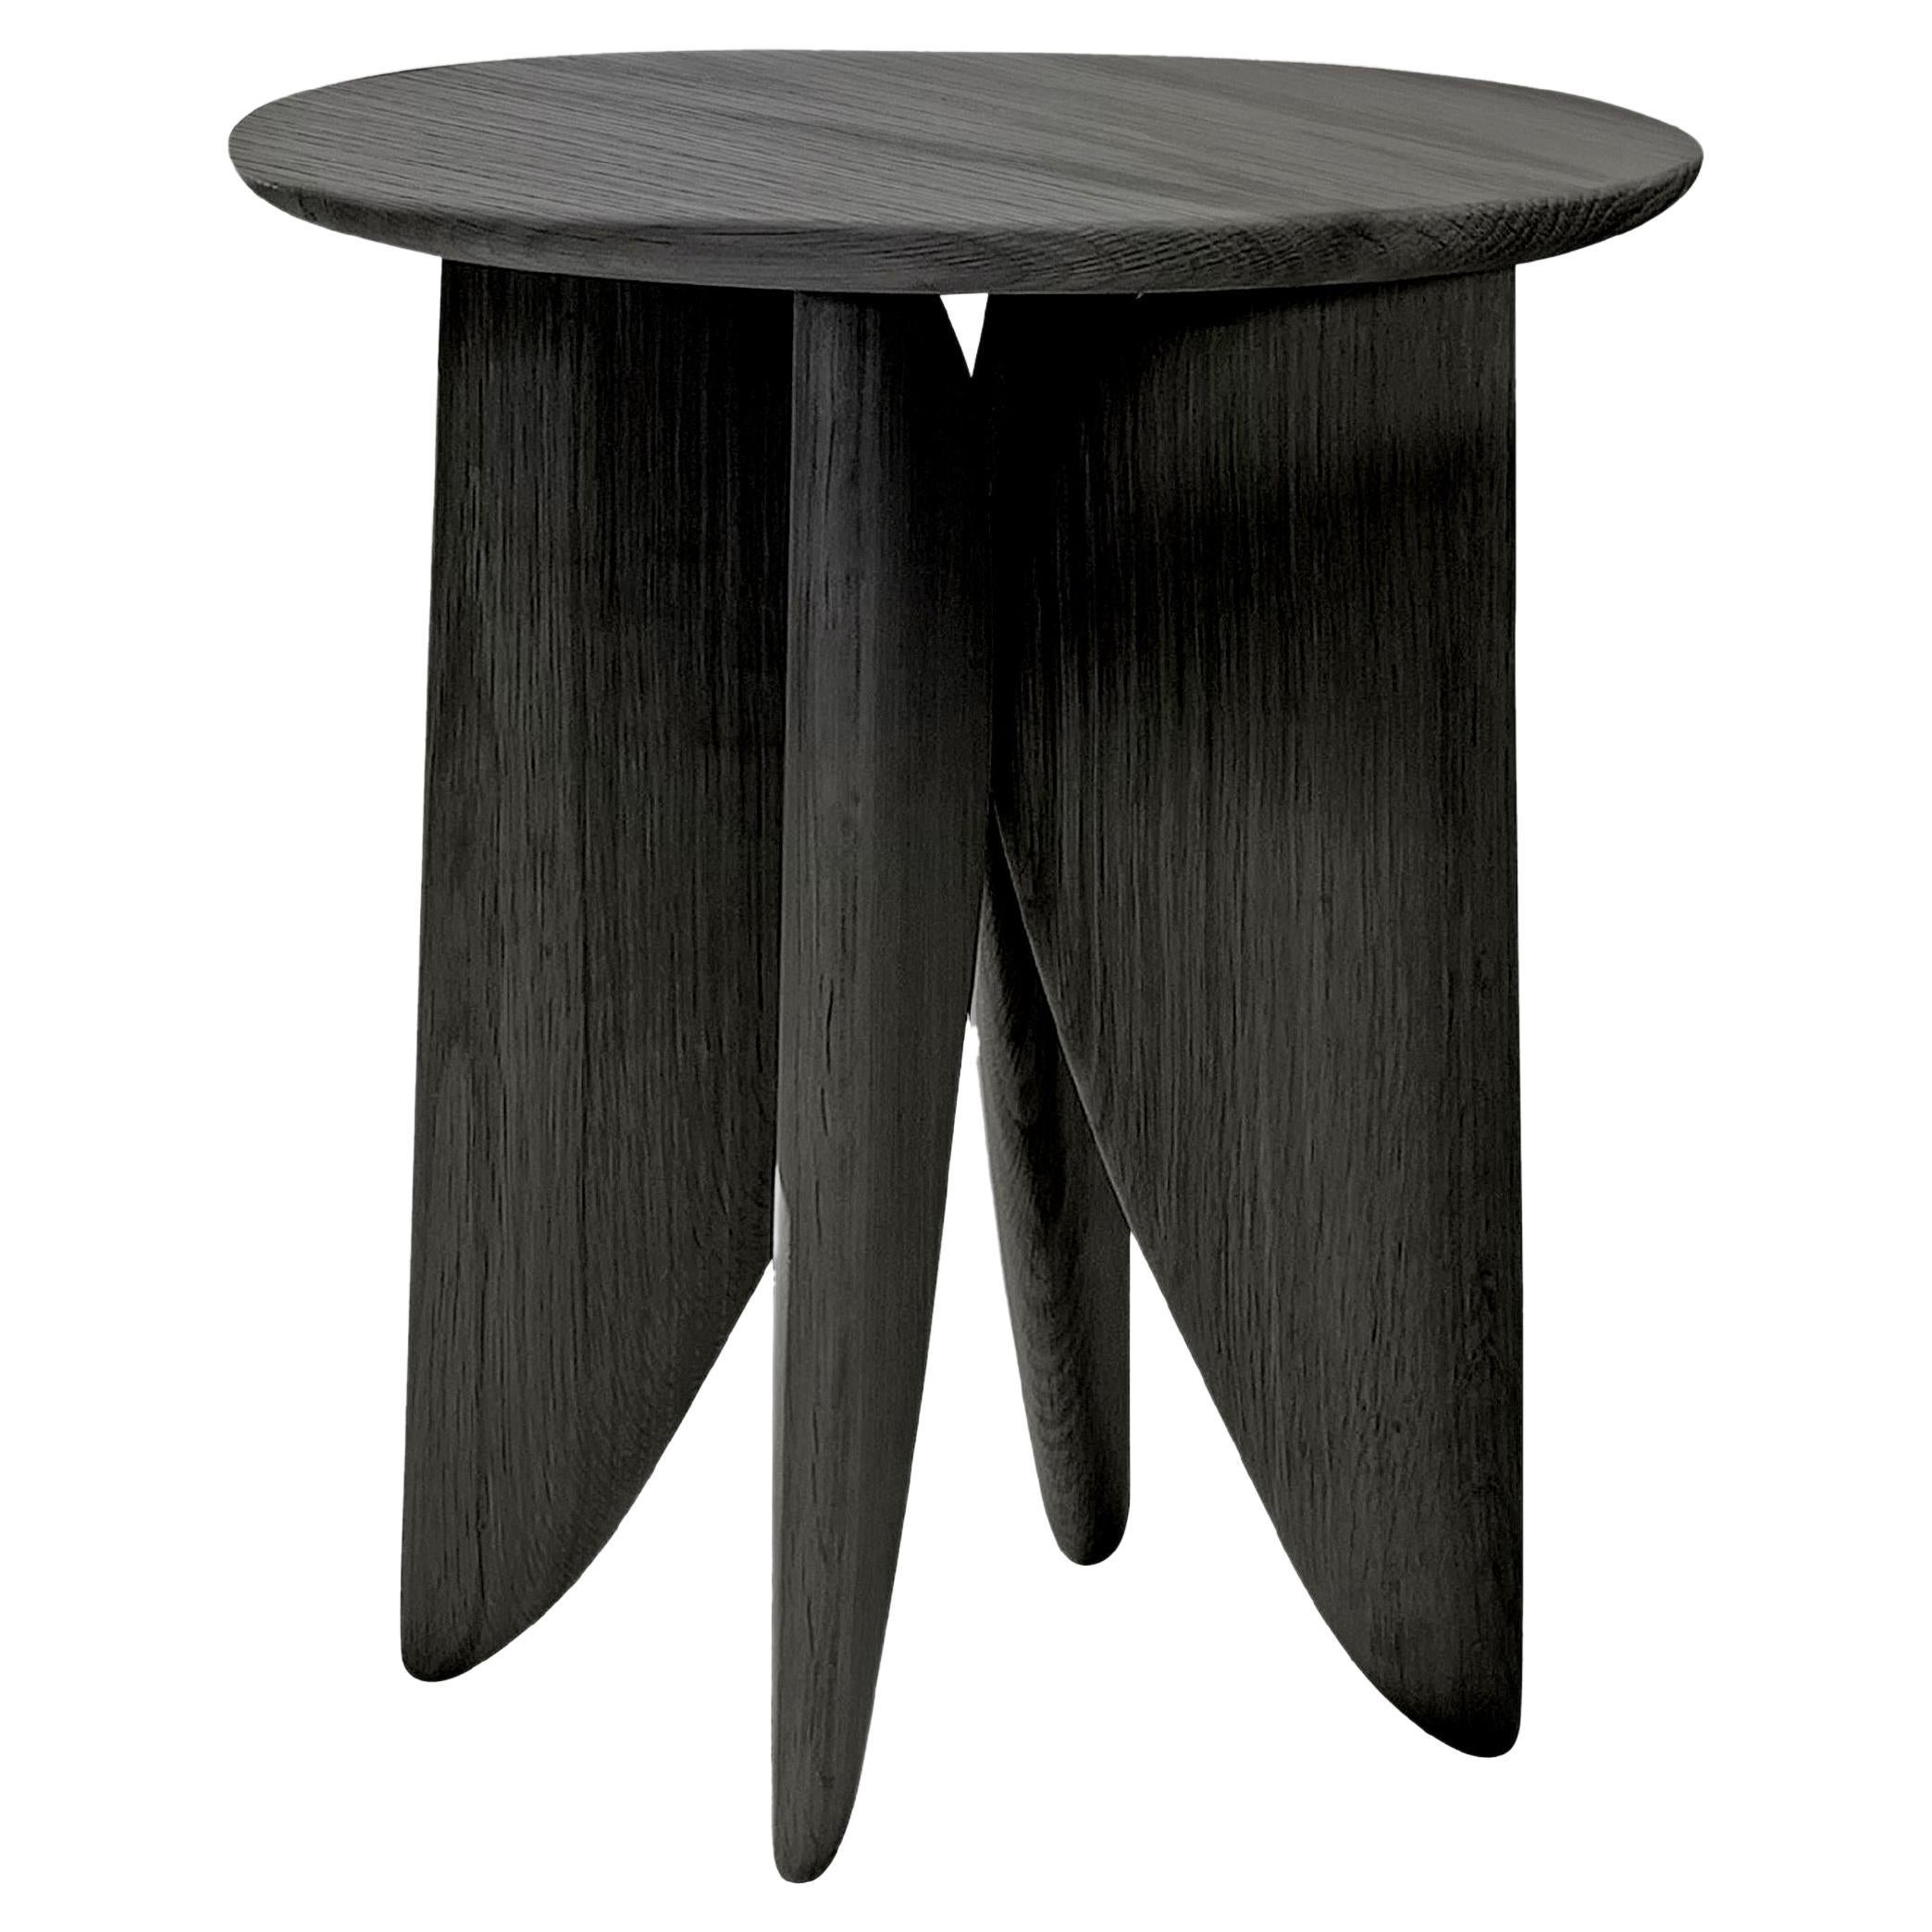 Noviembre V Stool, Side Table inspired in Burned Oak Wood by Joel Escalona For Sale